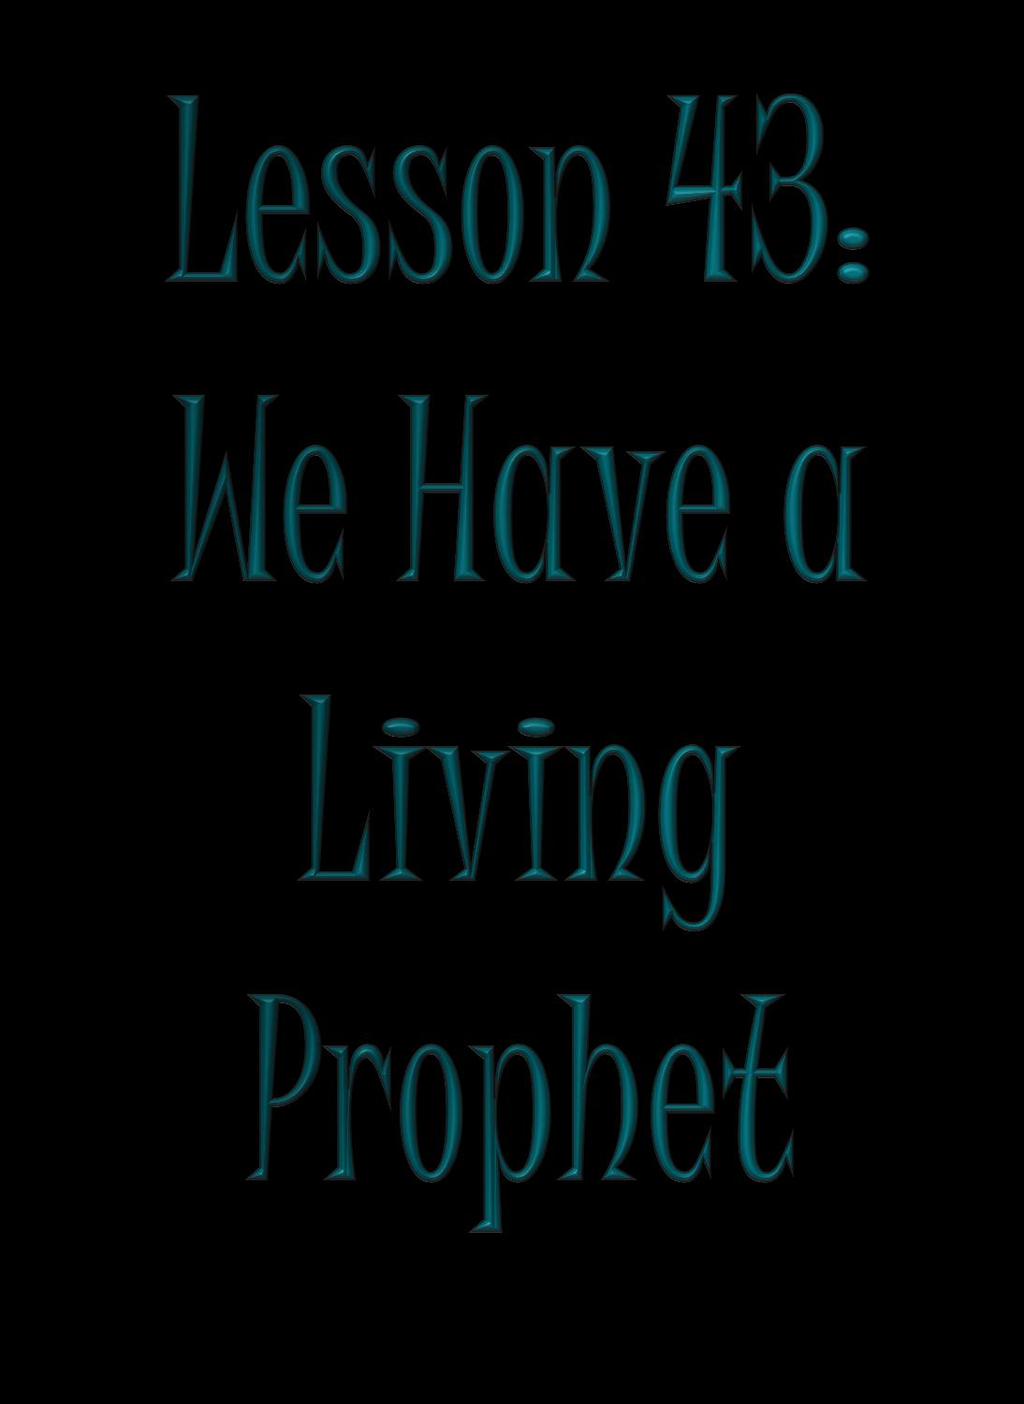 Lesson 43: We have a Living Prophet,